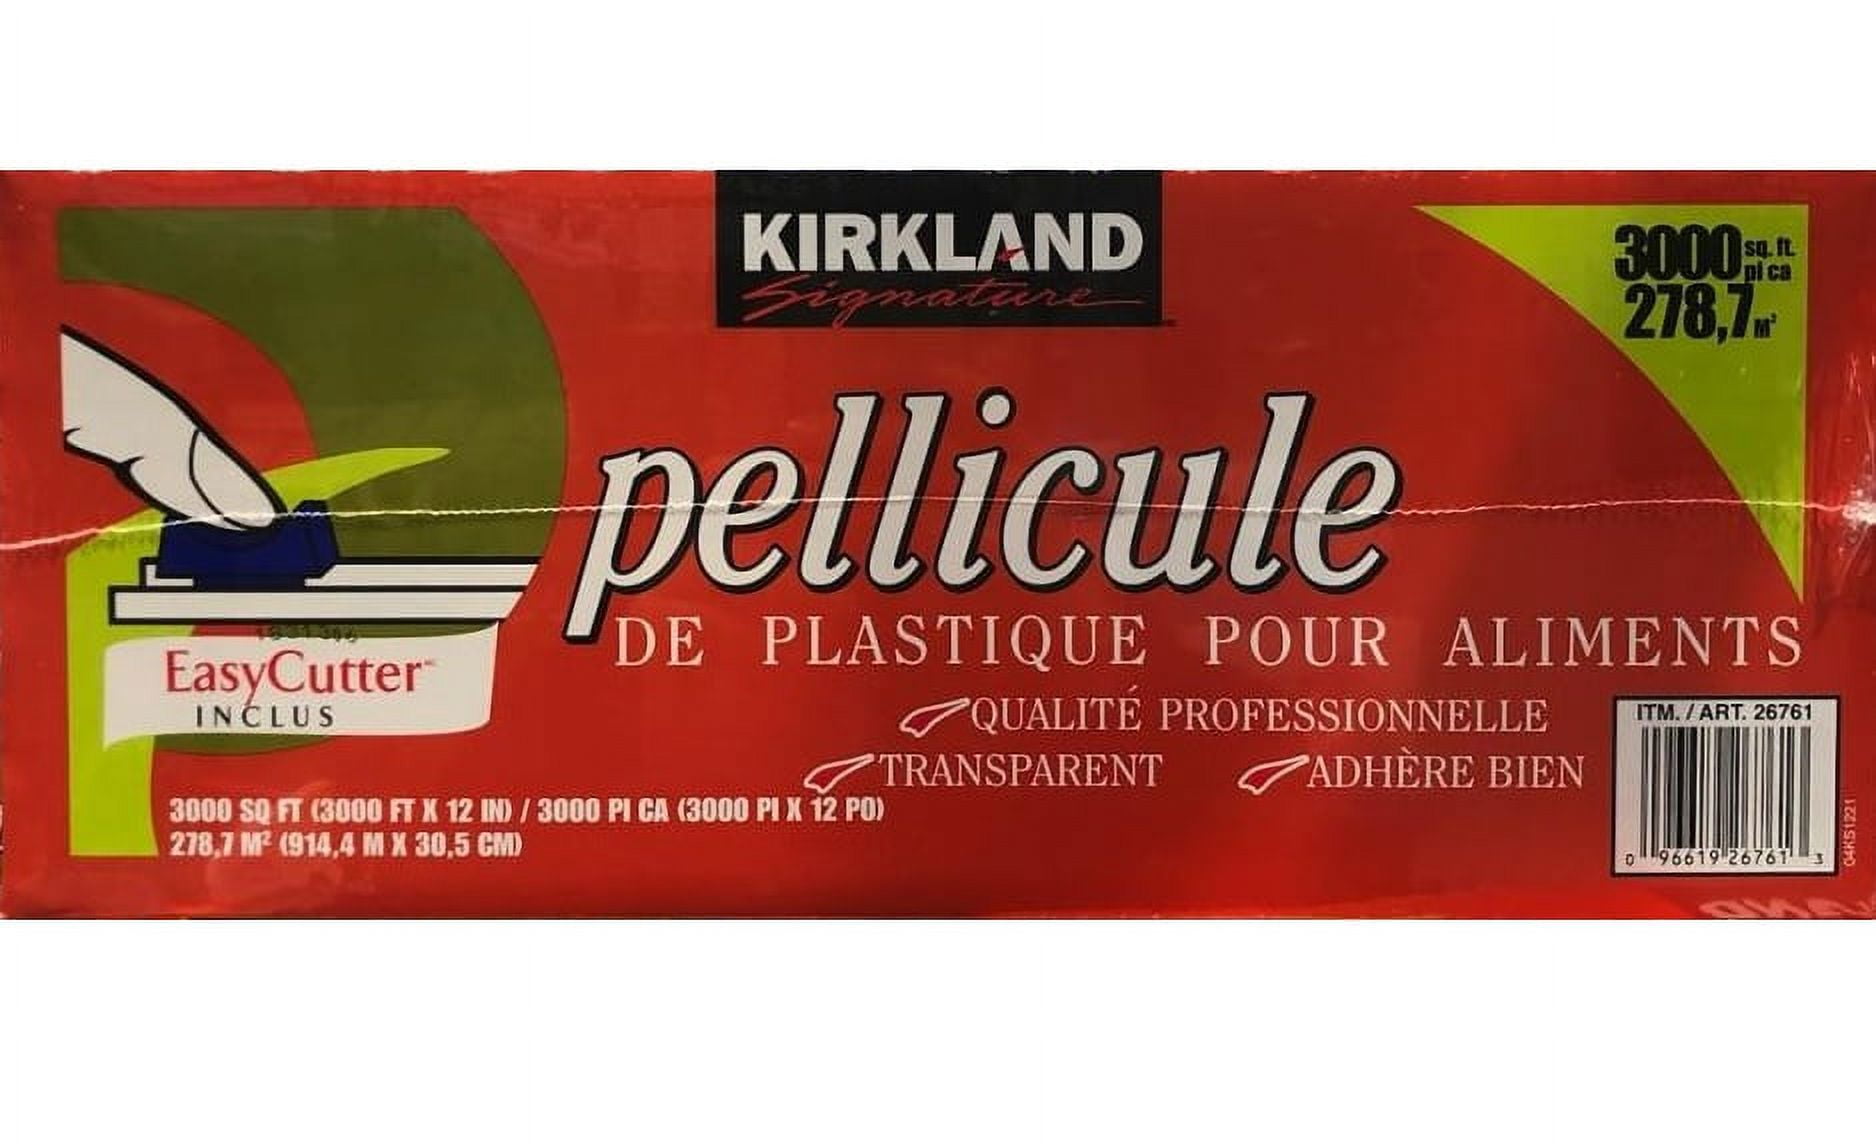 Kirkland Signature Stretch-Tite 12 X 3000' Premium Plastic Food Wrap  Reviews 2024